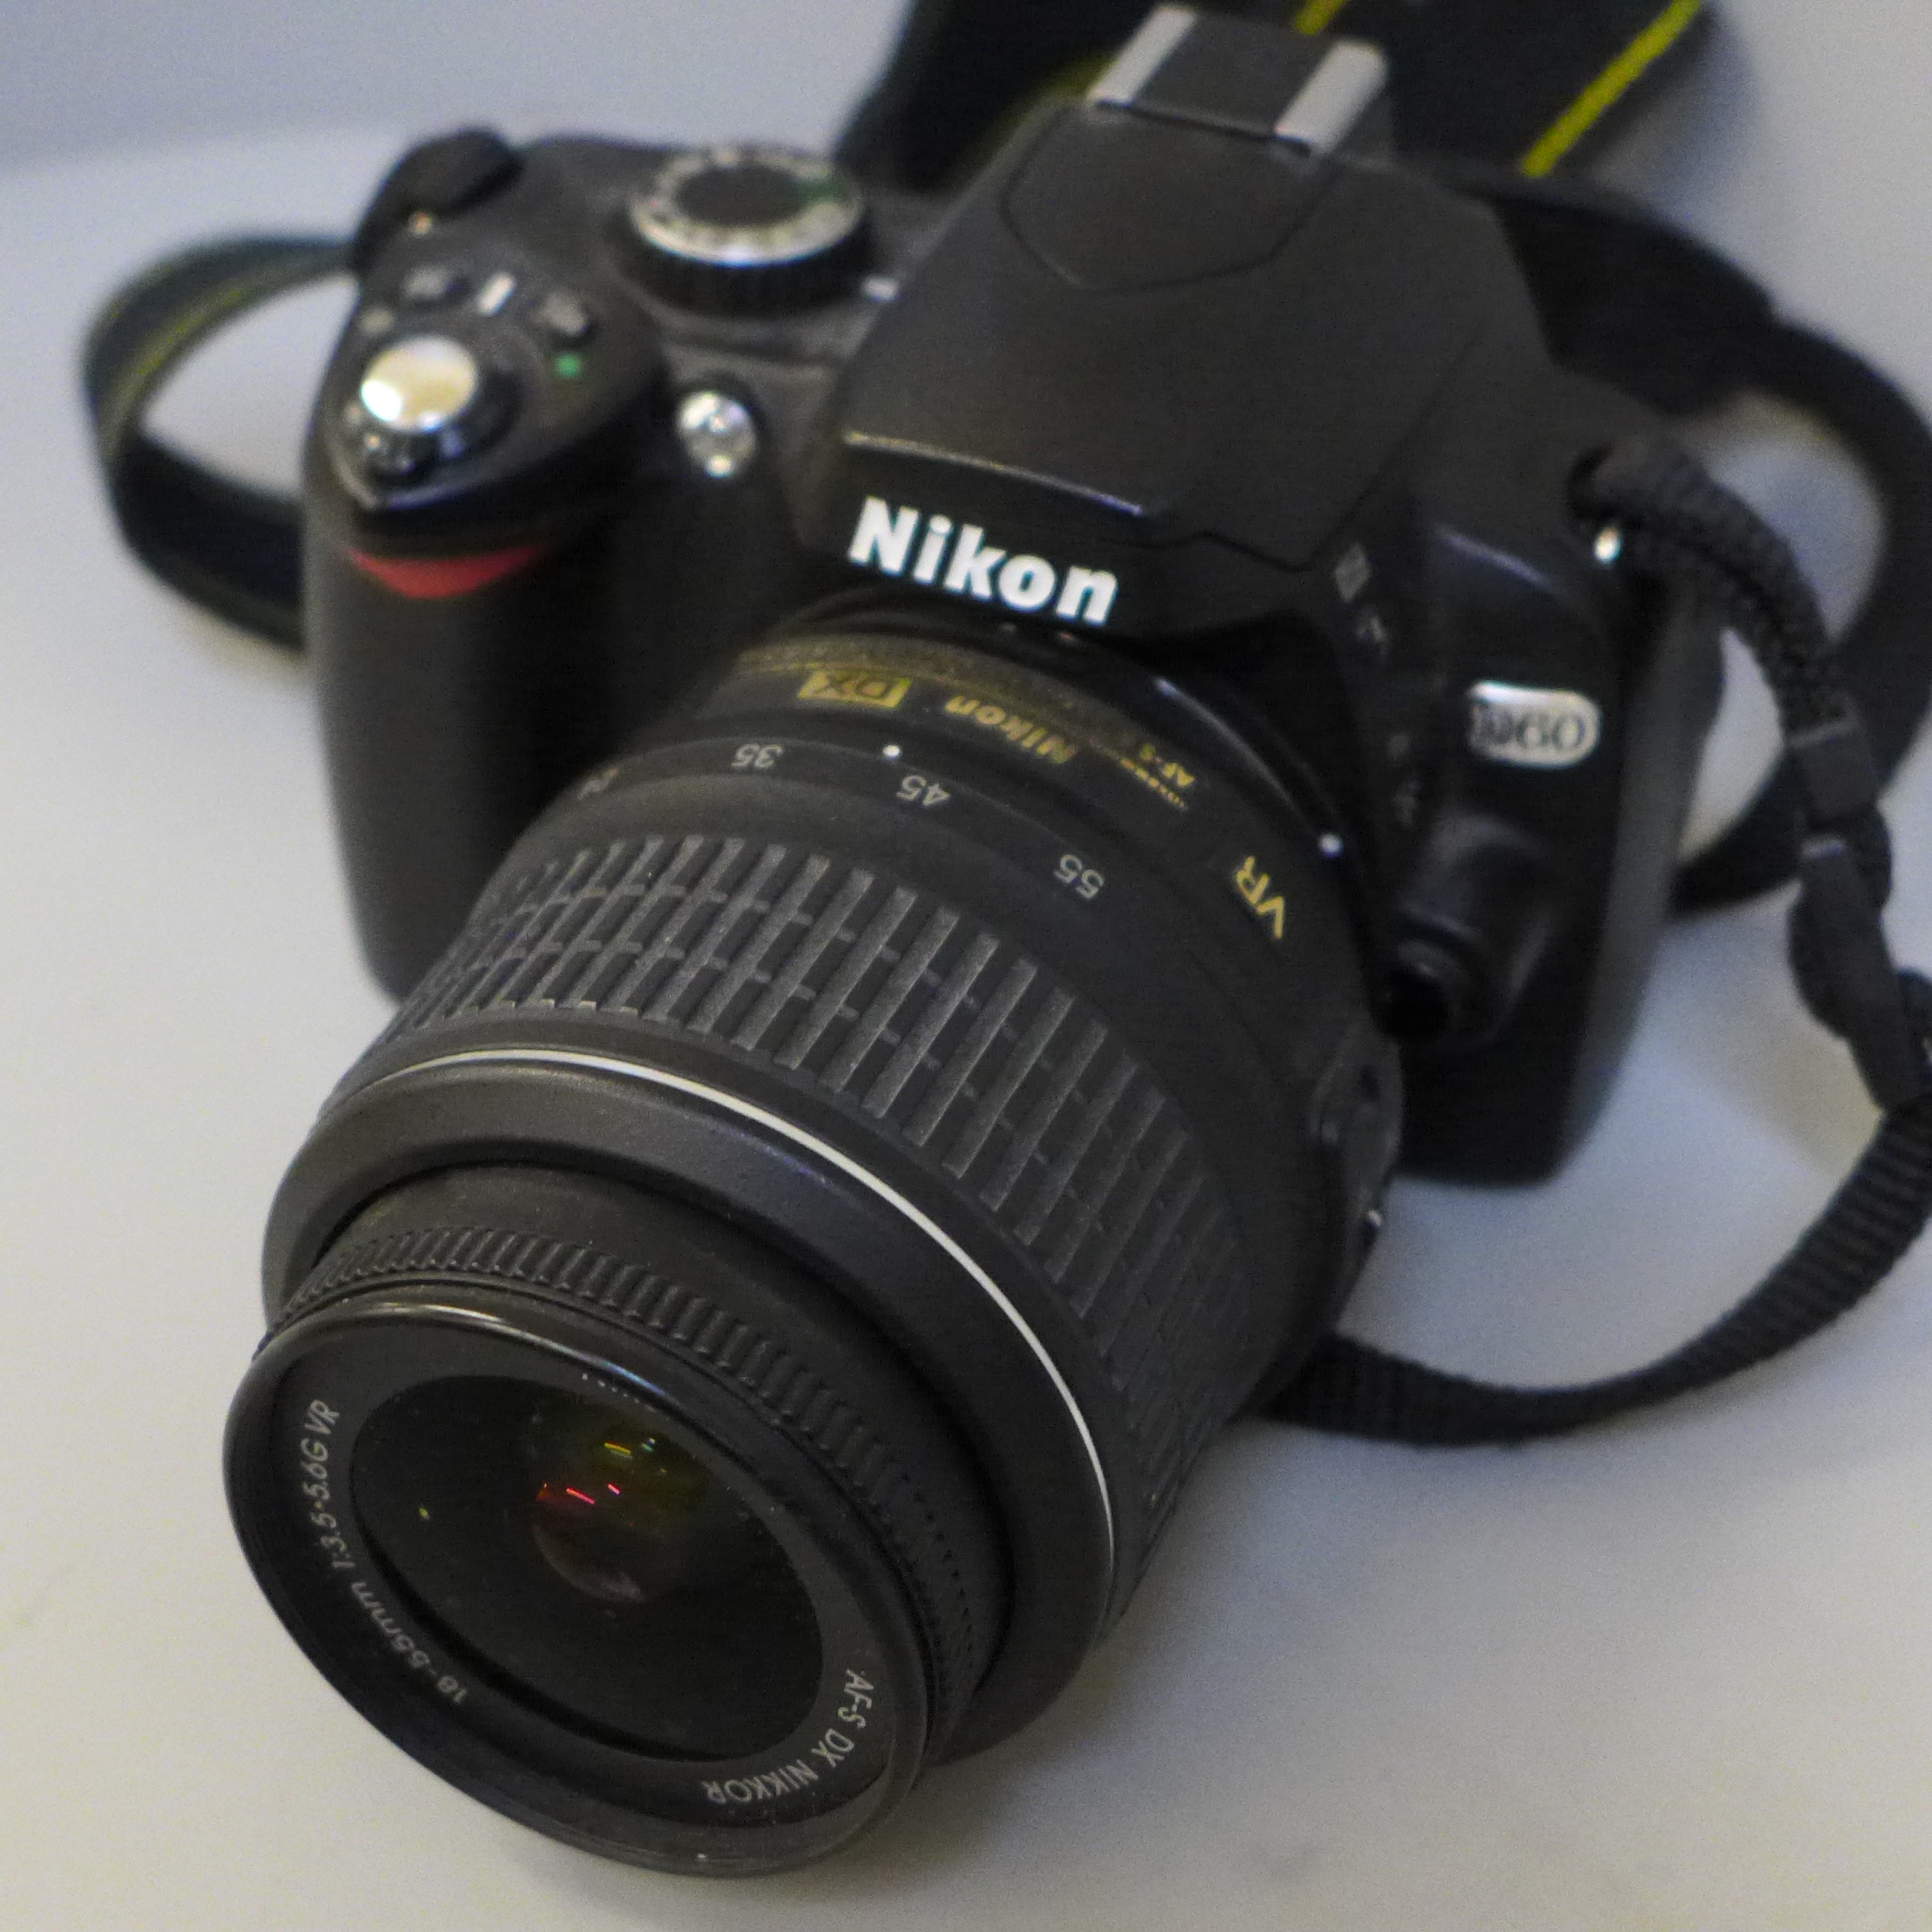 A Nikon D60 digital camera with a Nikon DX 18-55mm lens - Image 2 of 3